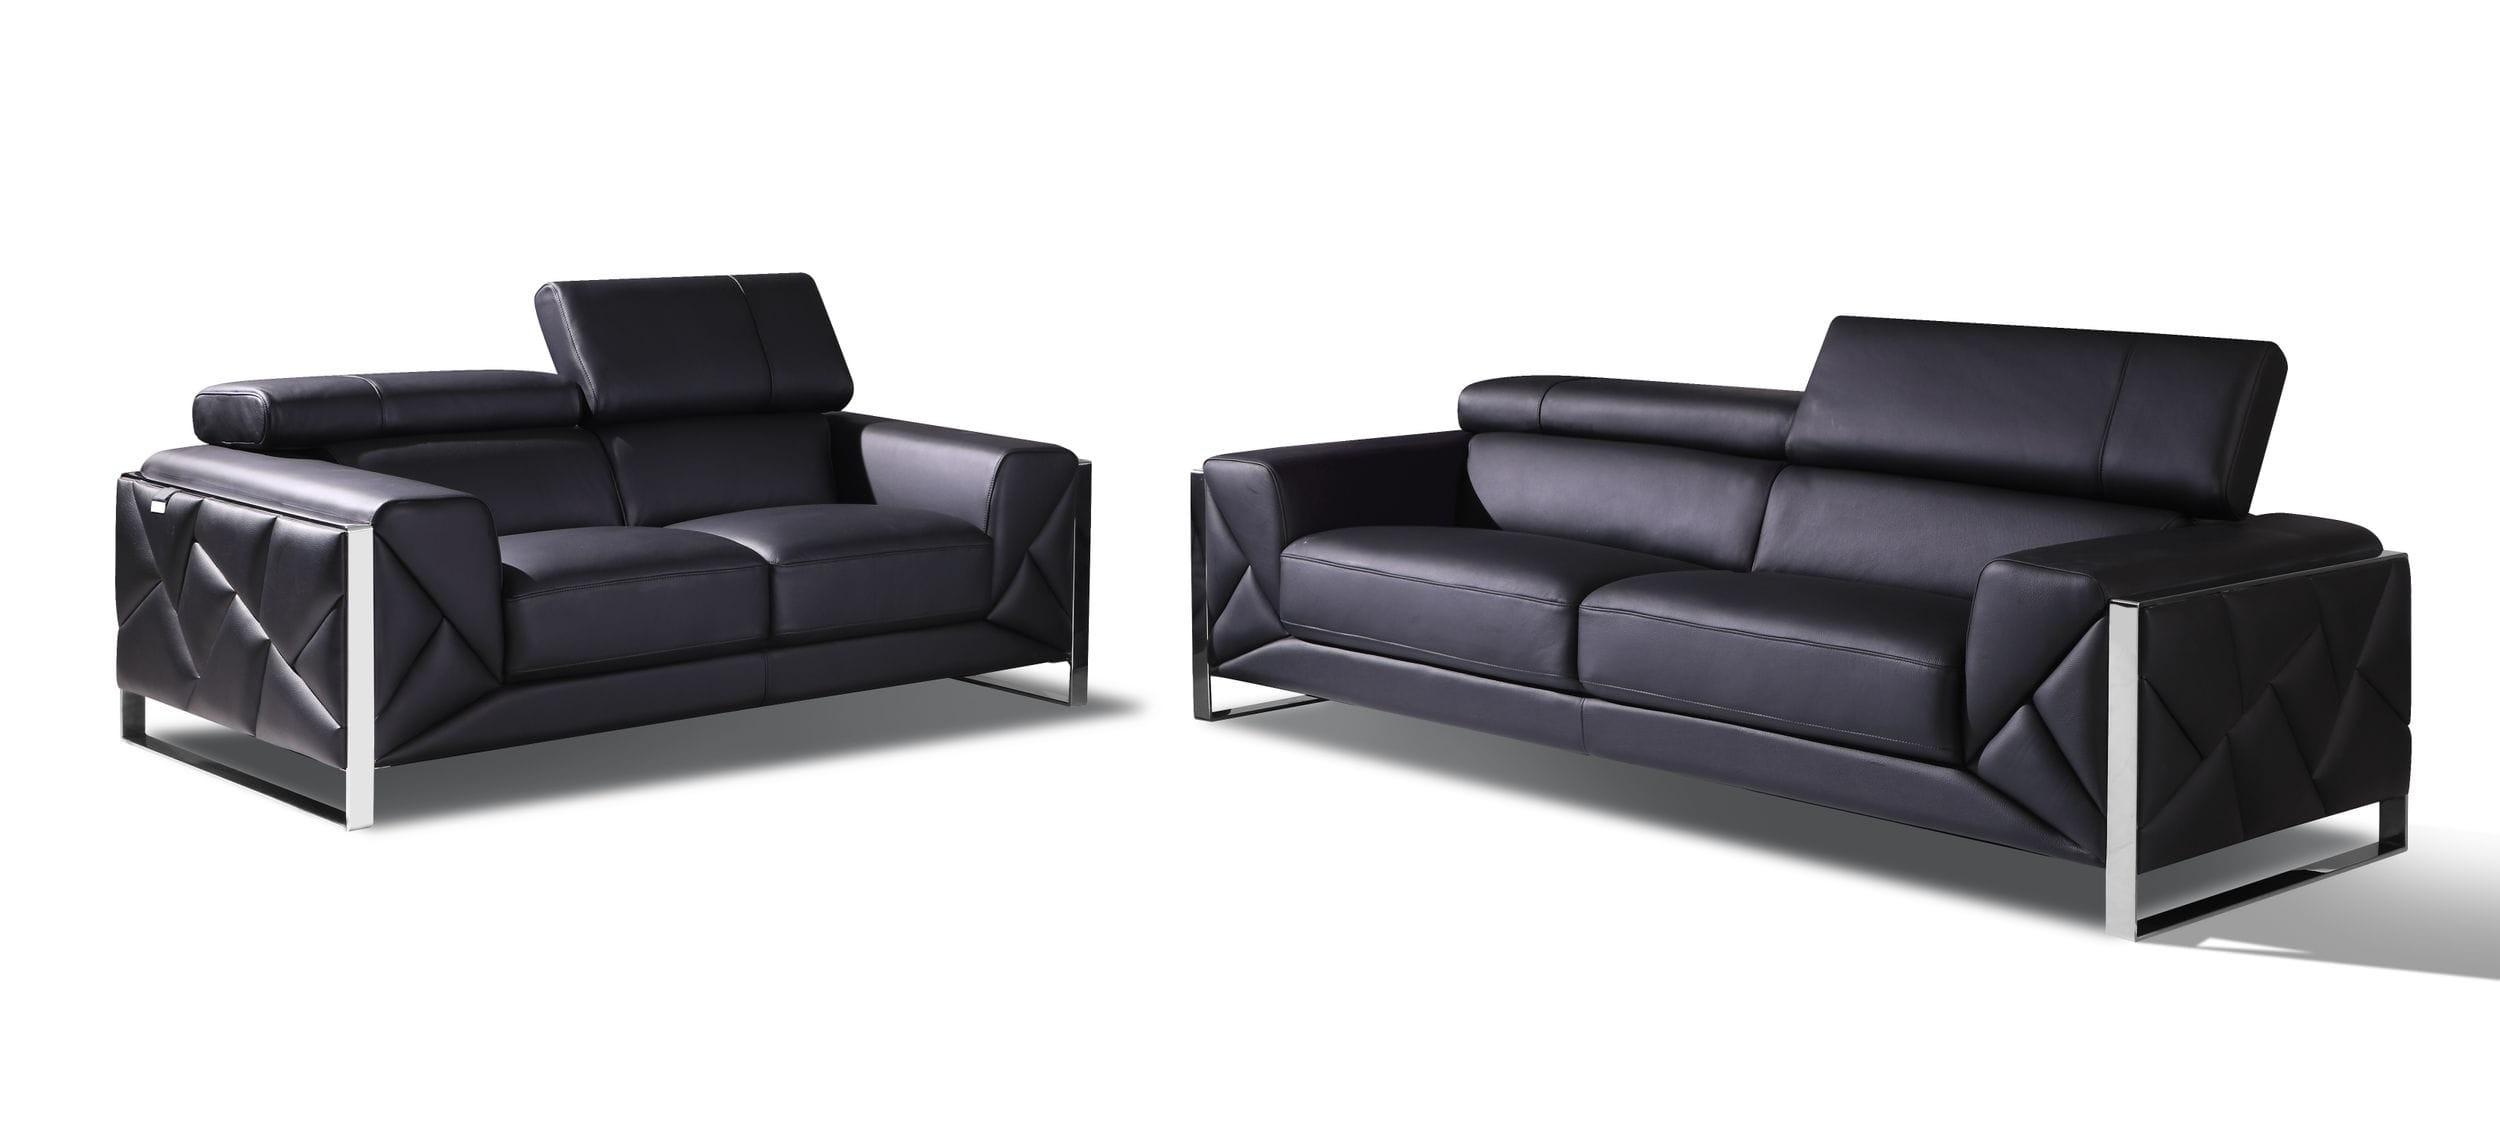 Contemporary Sofa and Loveseat Set 903-BLACK 903-BLACK-2PC in Black Genuine Italian Leatder